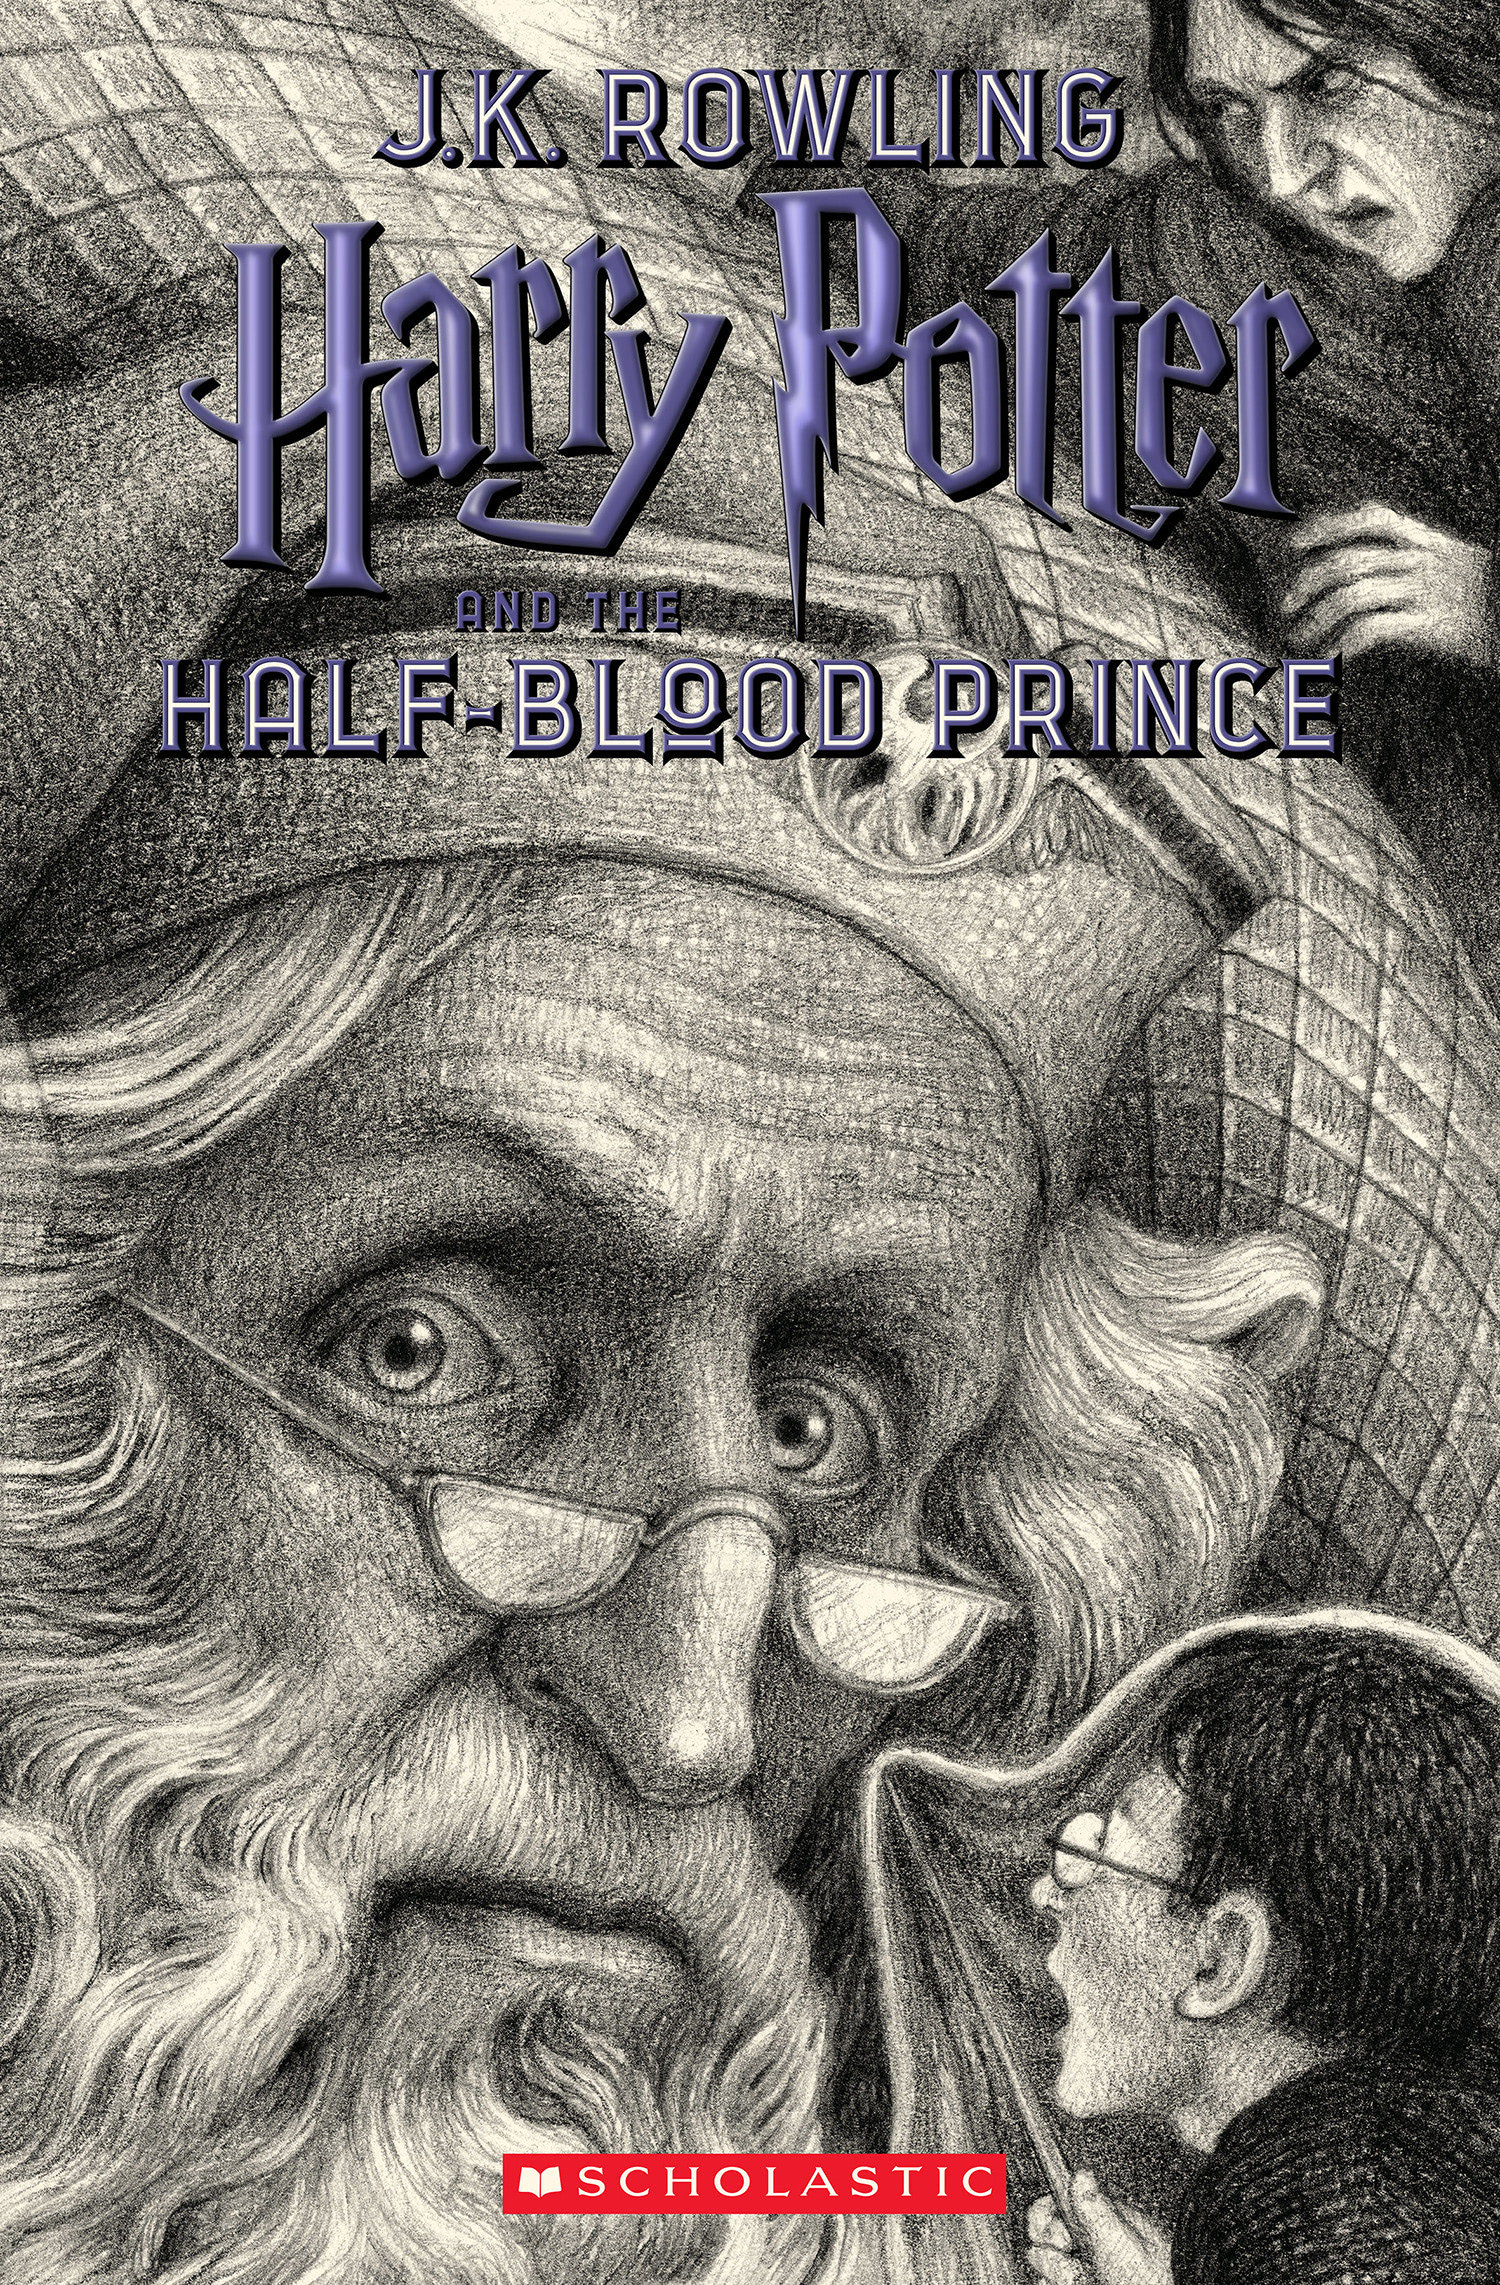 ‘Half-Blood Prince’ US 20th anniversary edition